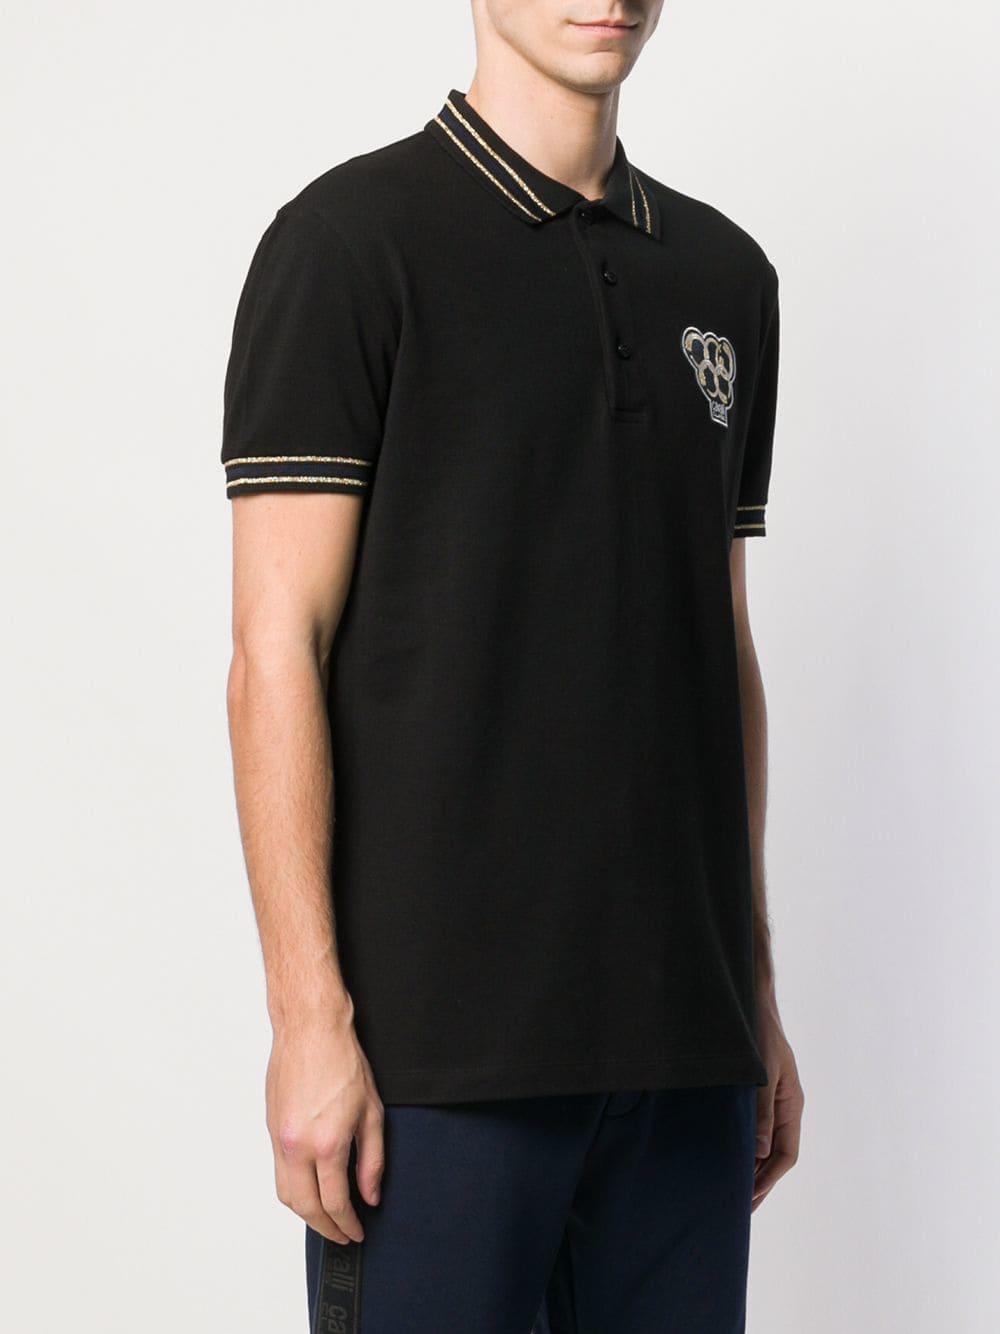 Class Roberto Cavalli Cotton Snake Logo Polo-shirt in Black for Men - Lyst